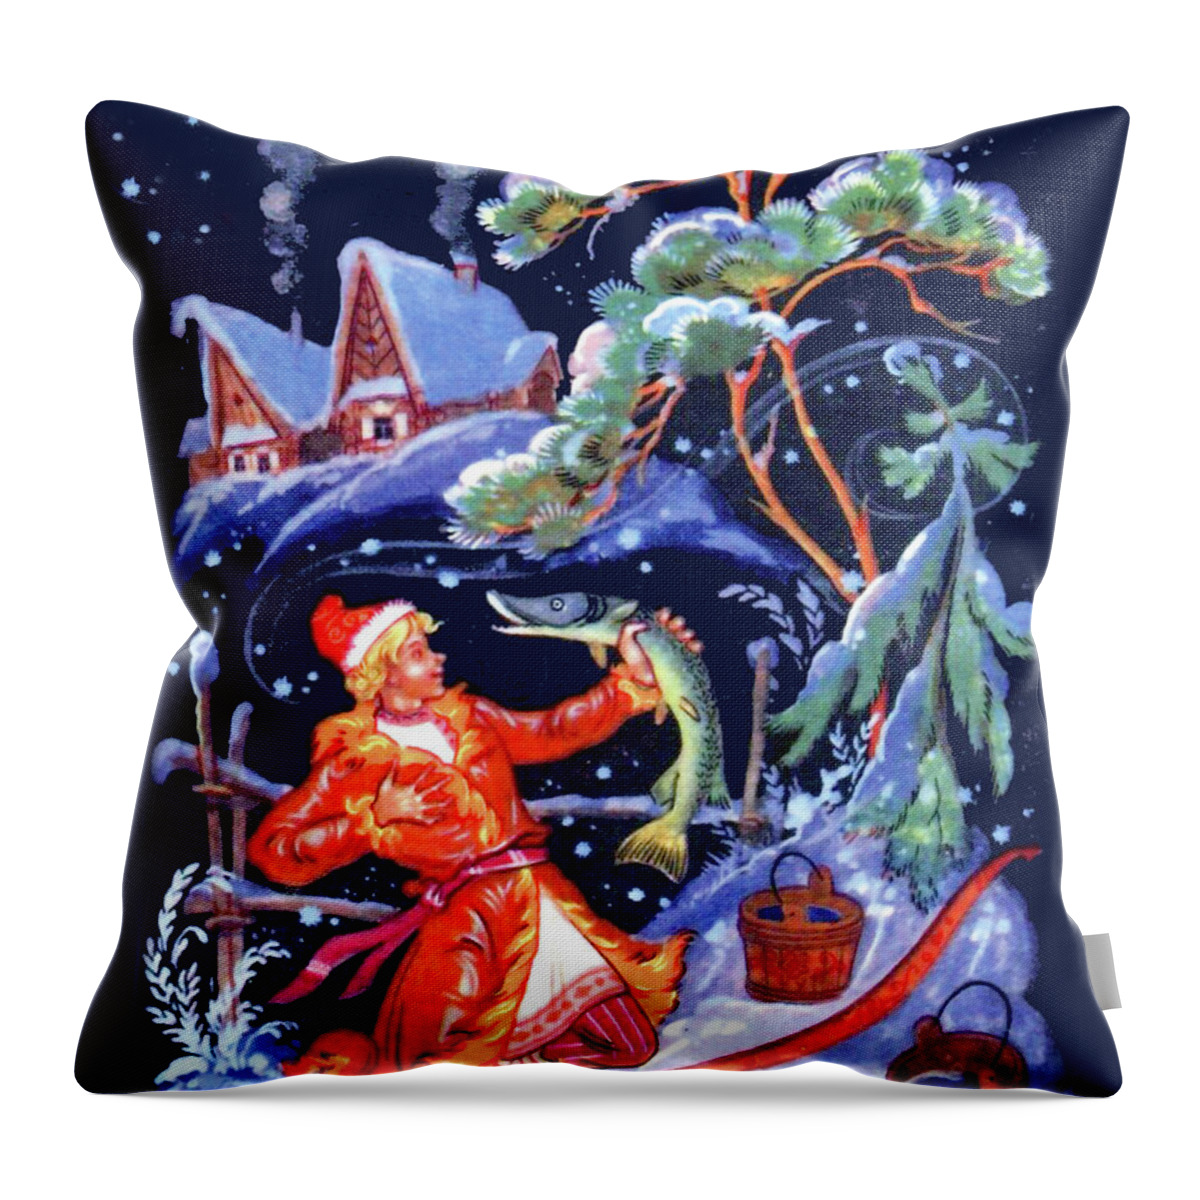 Soviet Throw Pillow featuring the digital art Soviet New Year Fairy Tale by Long Shot